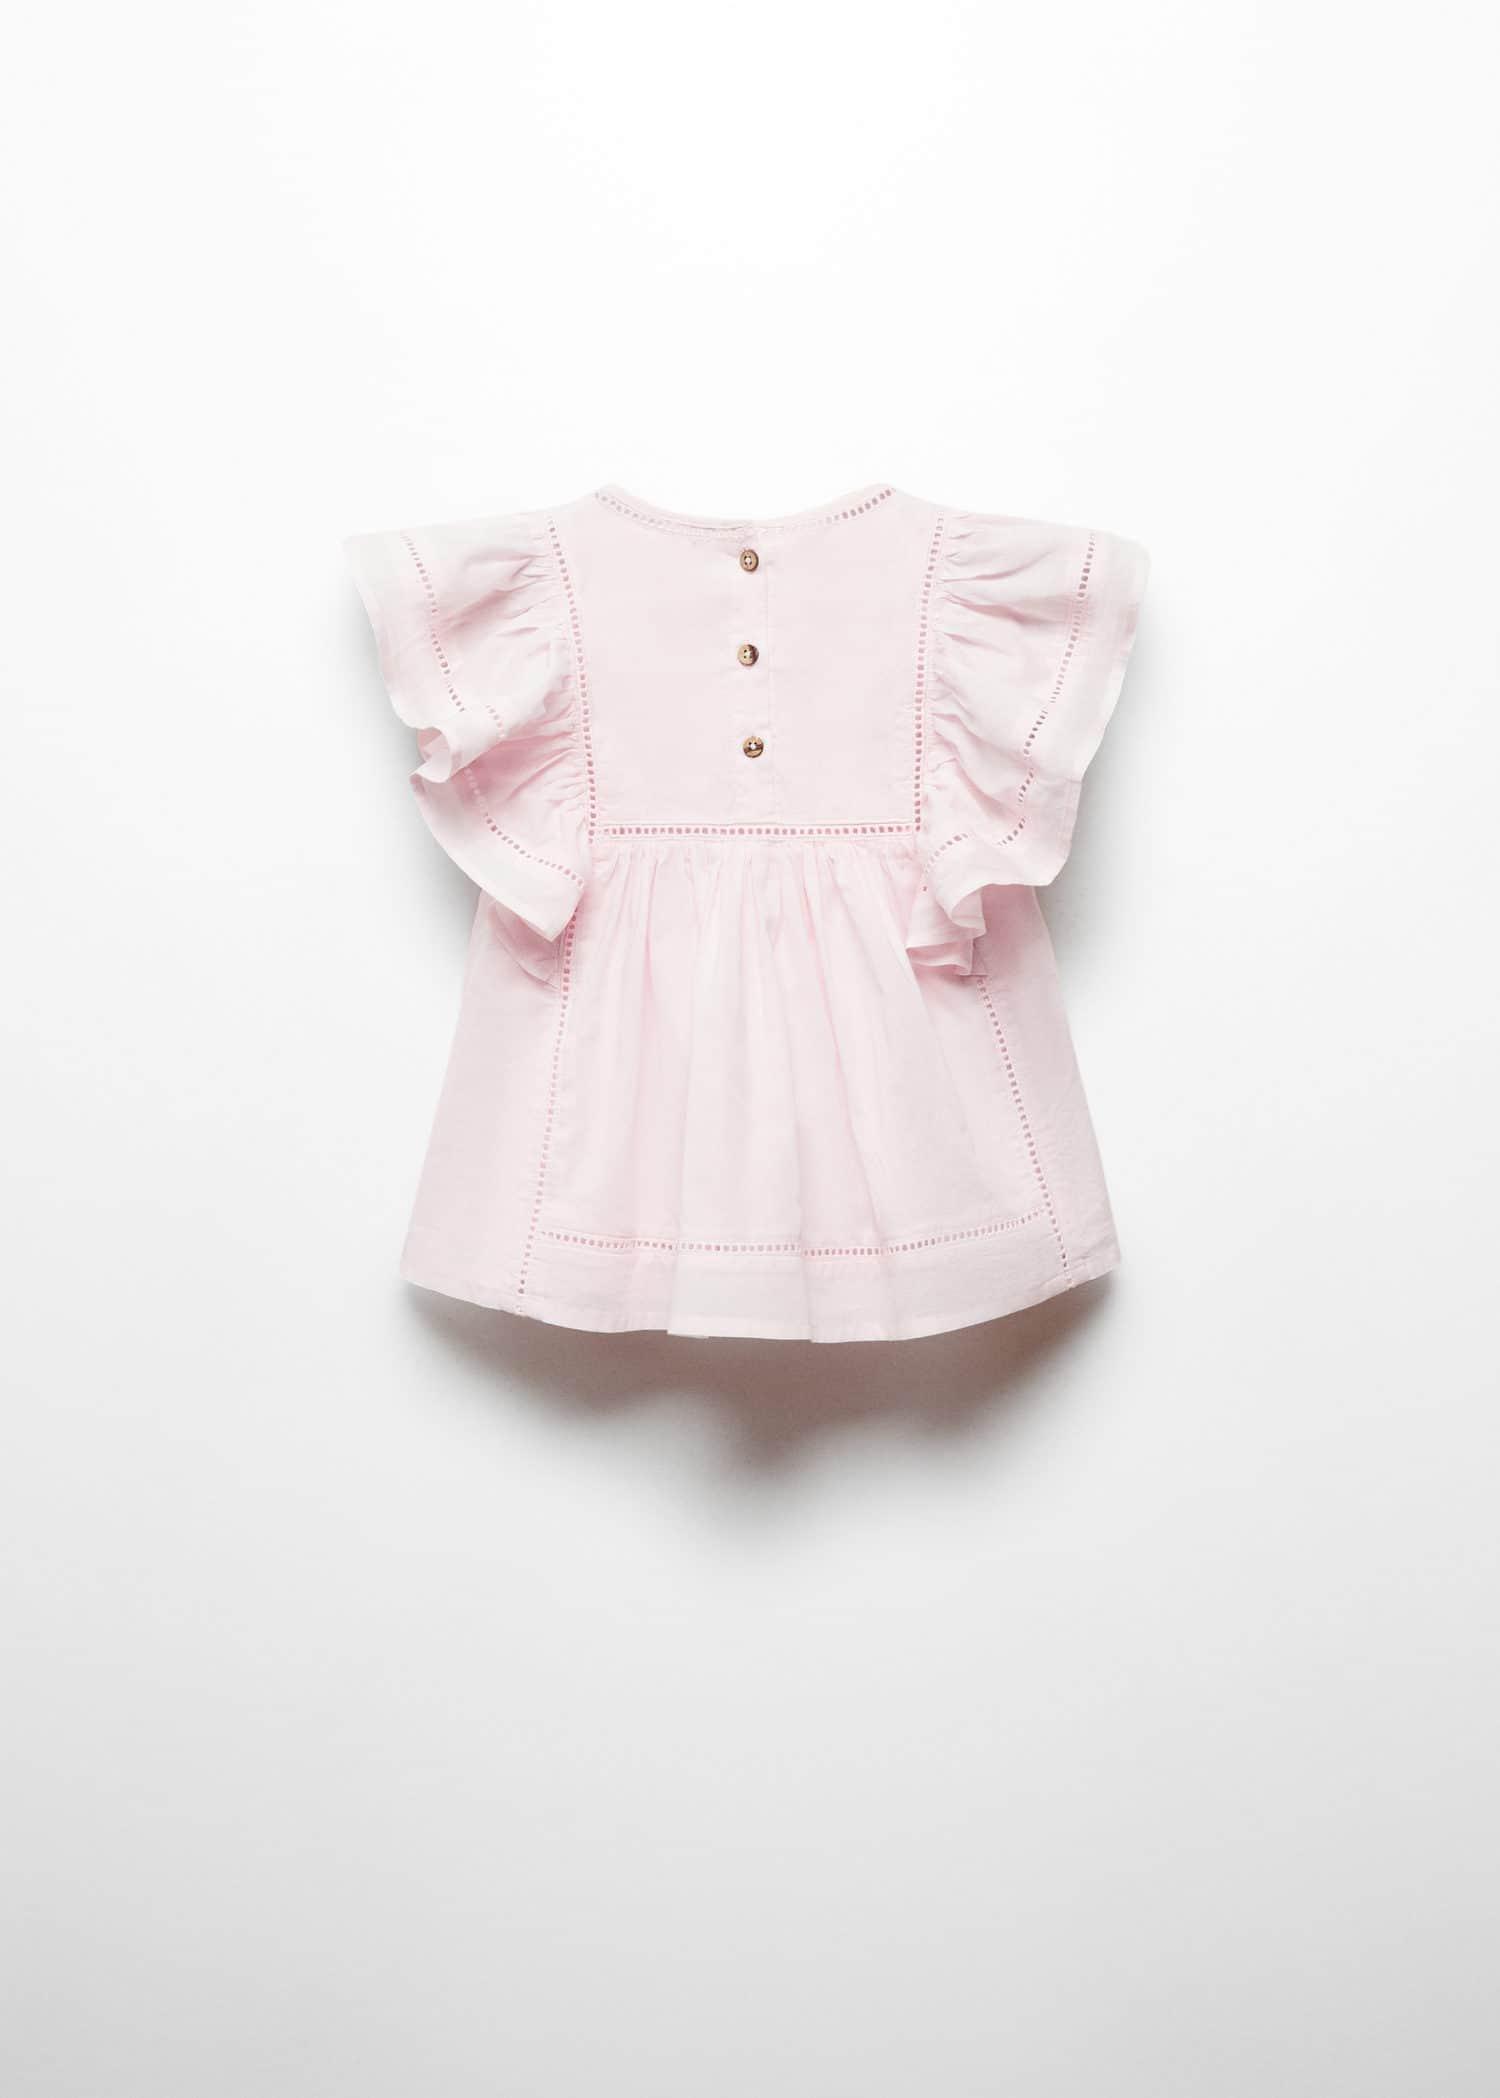 Mango - Pink Ruffled Open-Work Dress, Kids Girls